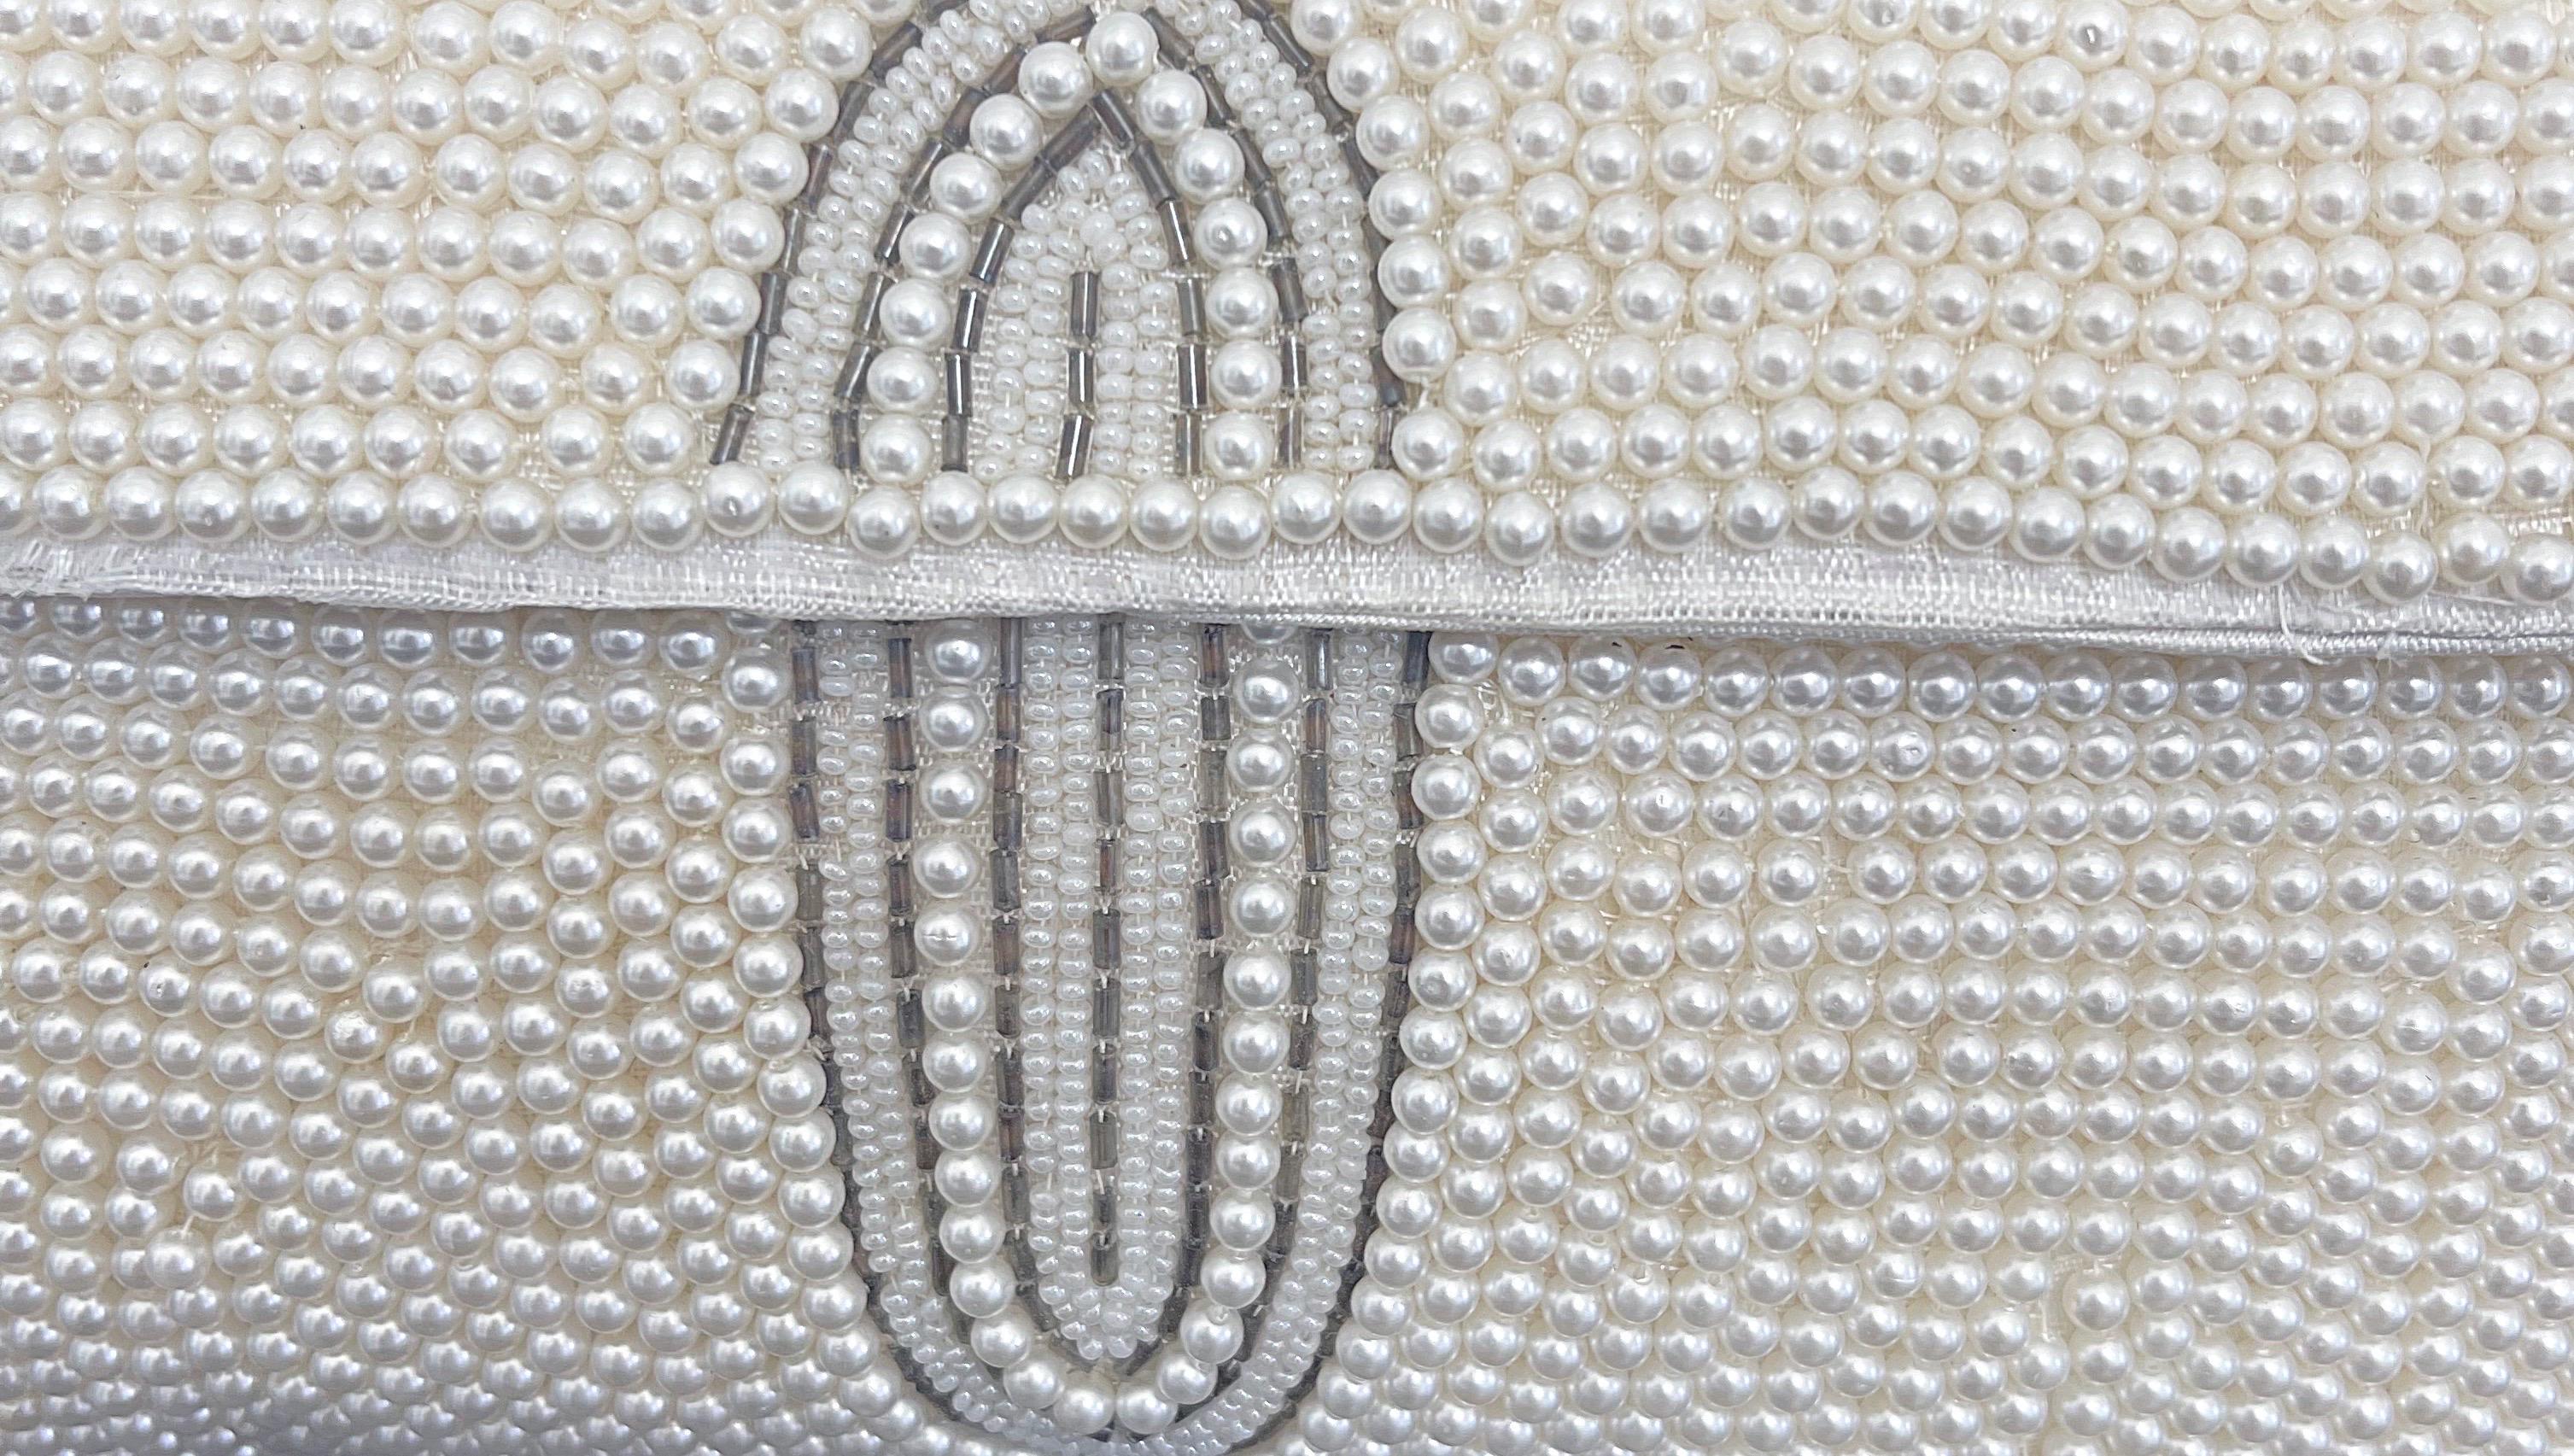 Gray 1950s White Pearl Bead Encrusted Vintage Bridal Wedding Vintage 50s Clutch Bag For Sale